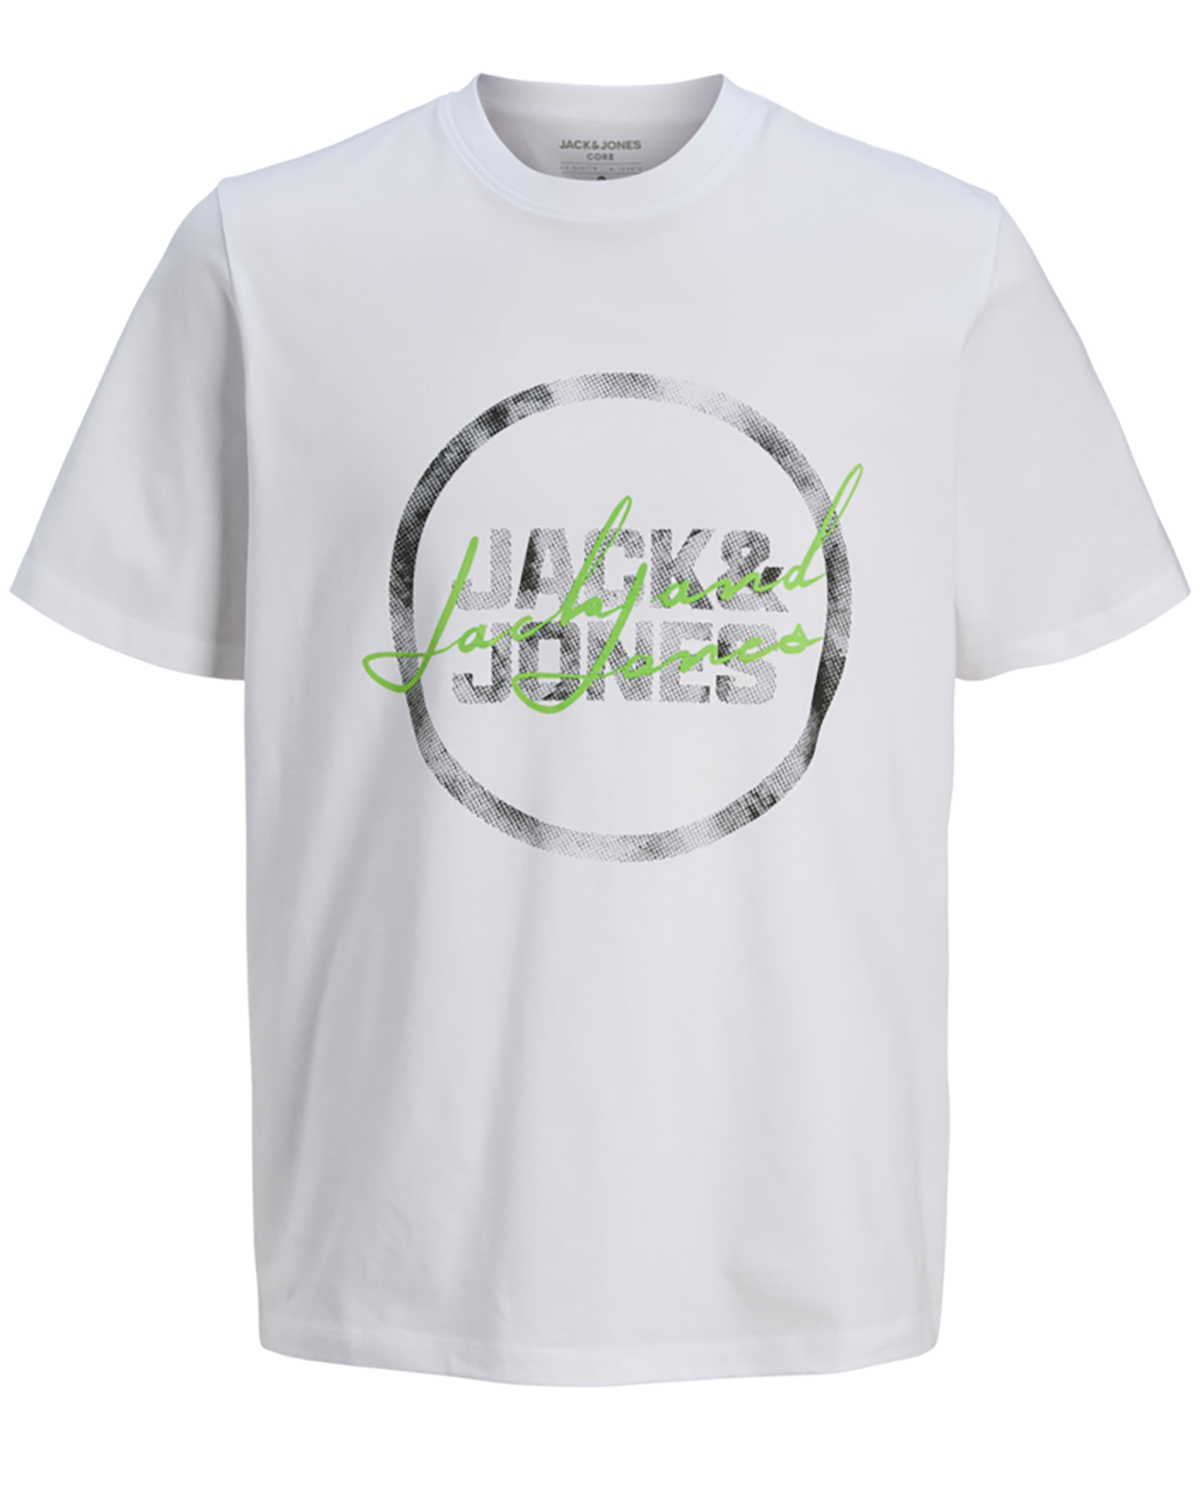 Jack & Jones t-shirt s/s, Script tee, hvid - 182,M+,M